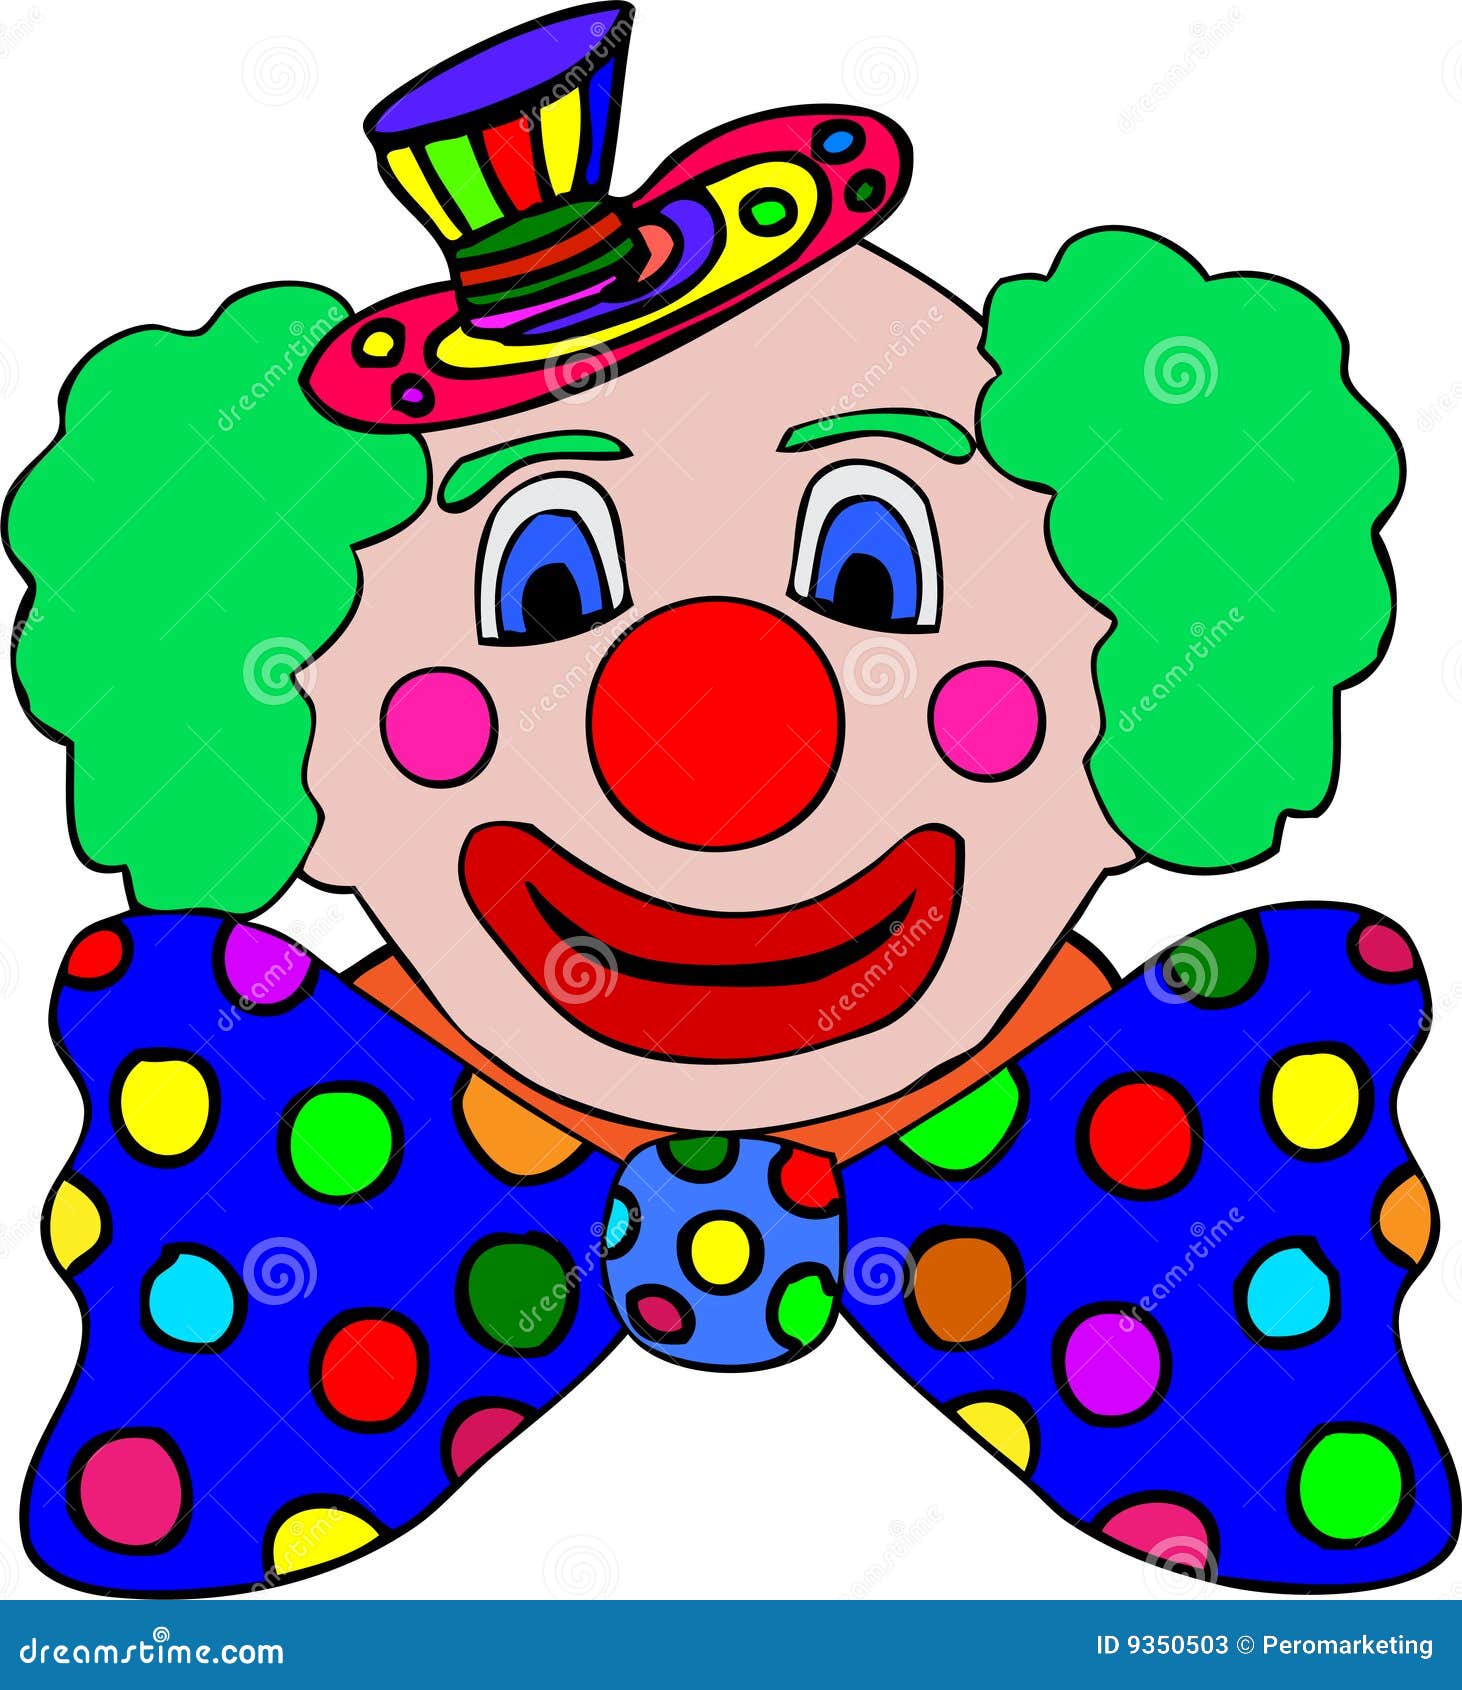 clown mask clipart free - photo #28